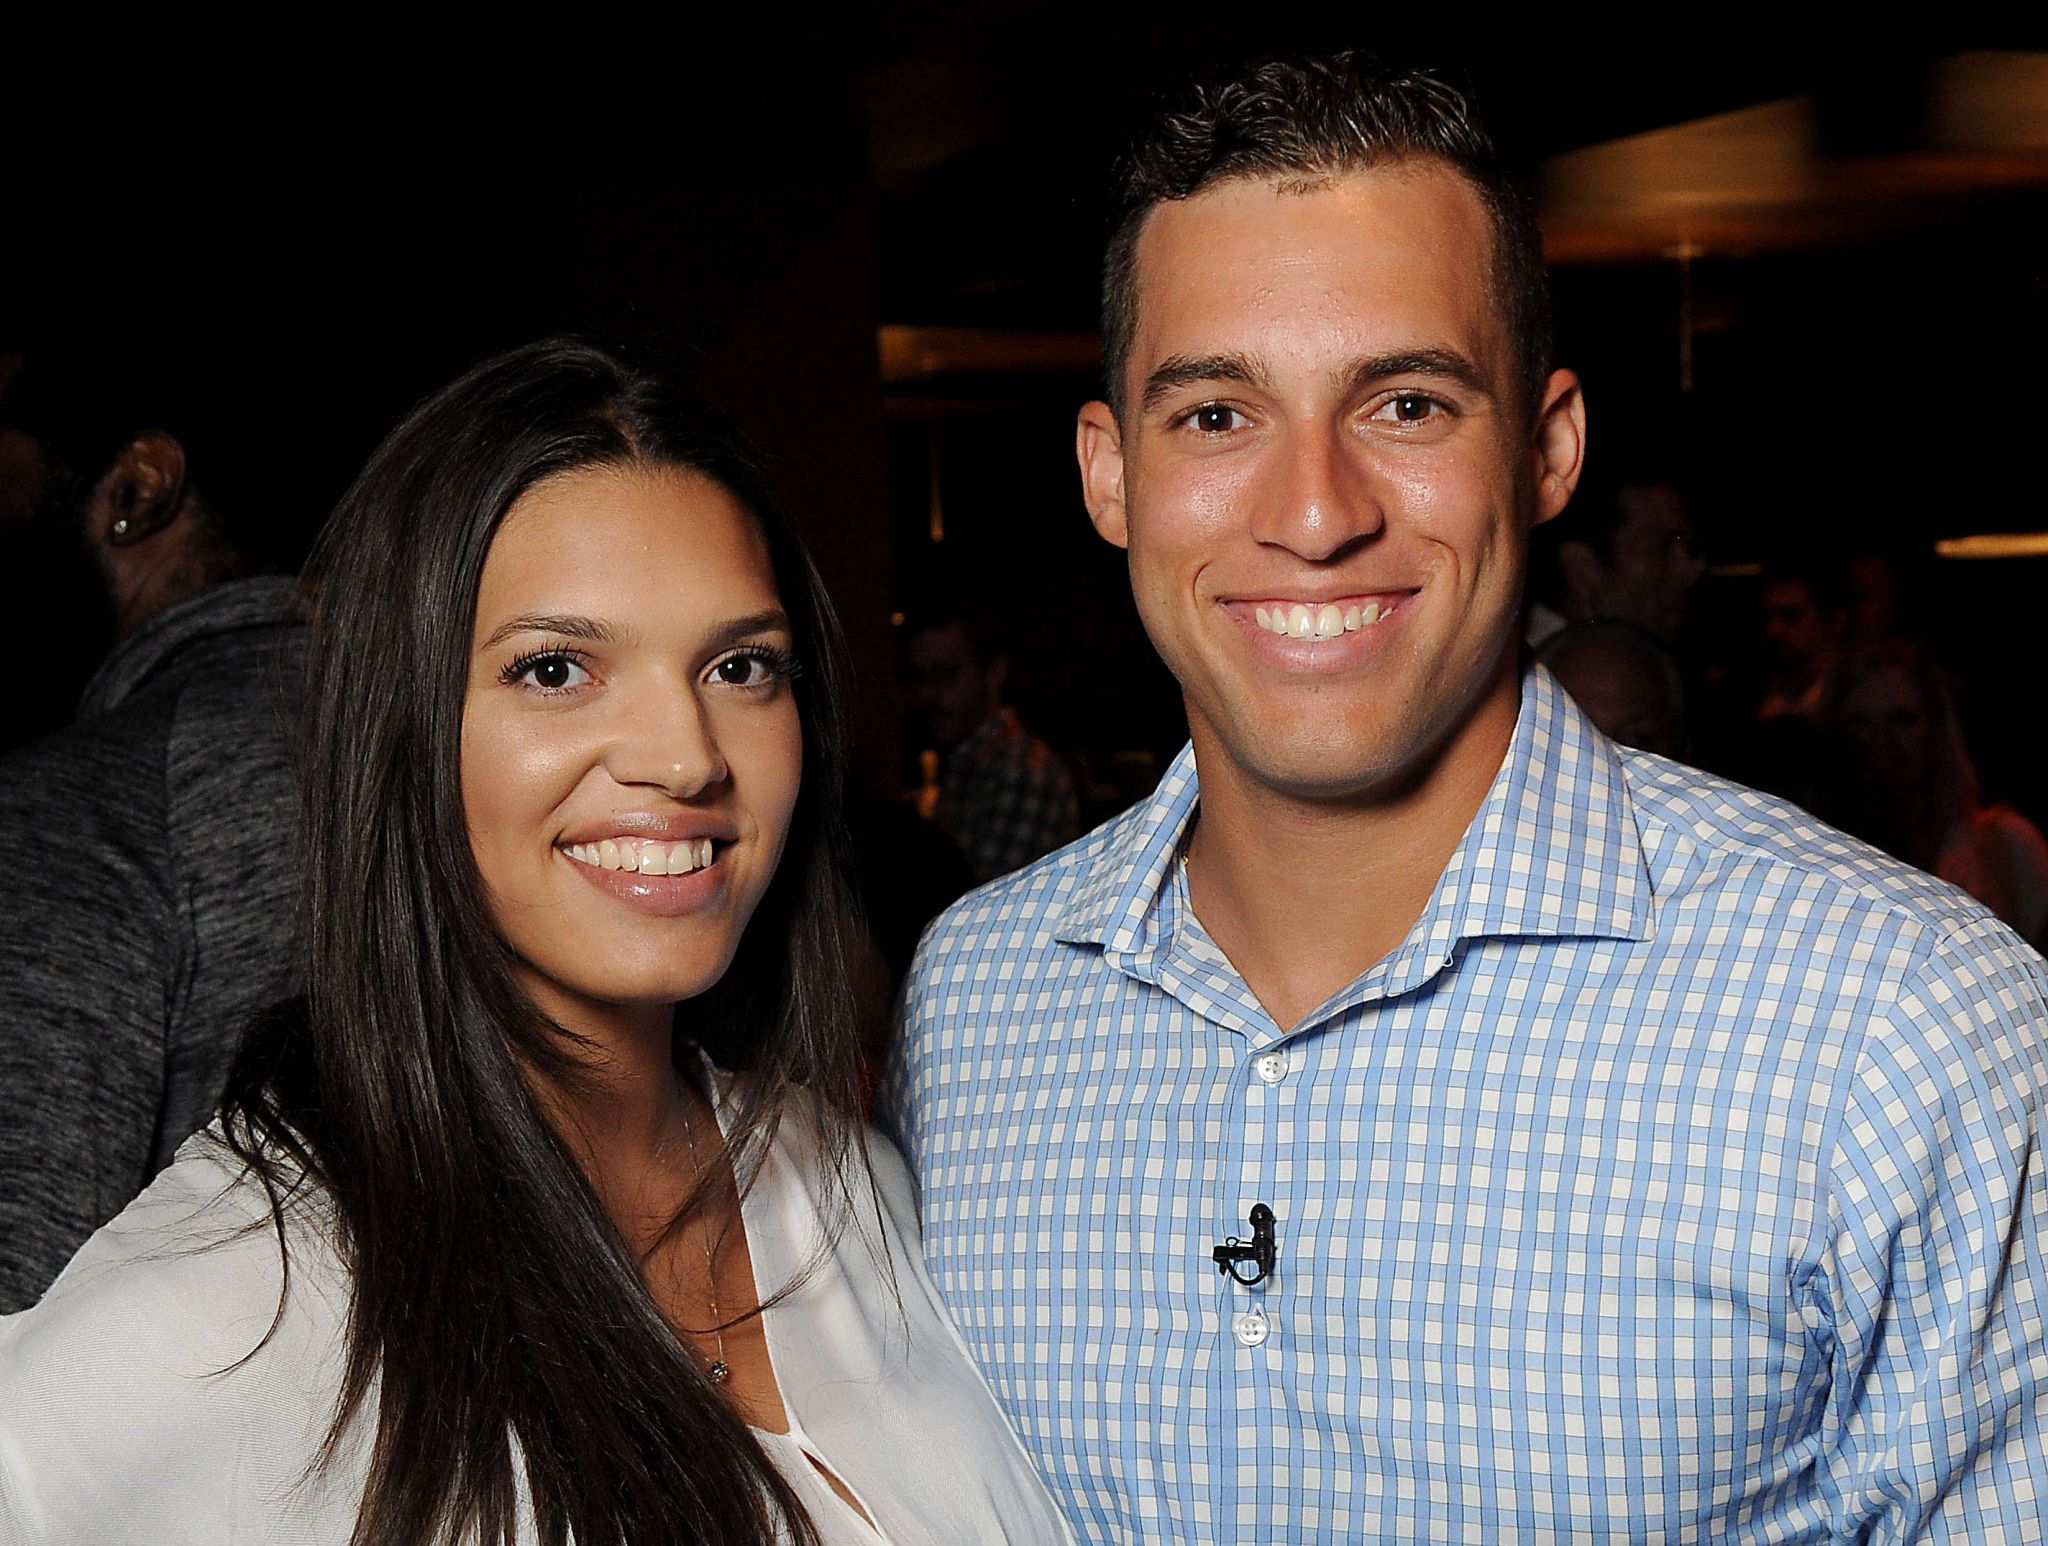 Meet Charlise Castro, George Springer's fiancée and former softball star